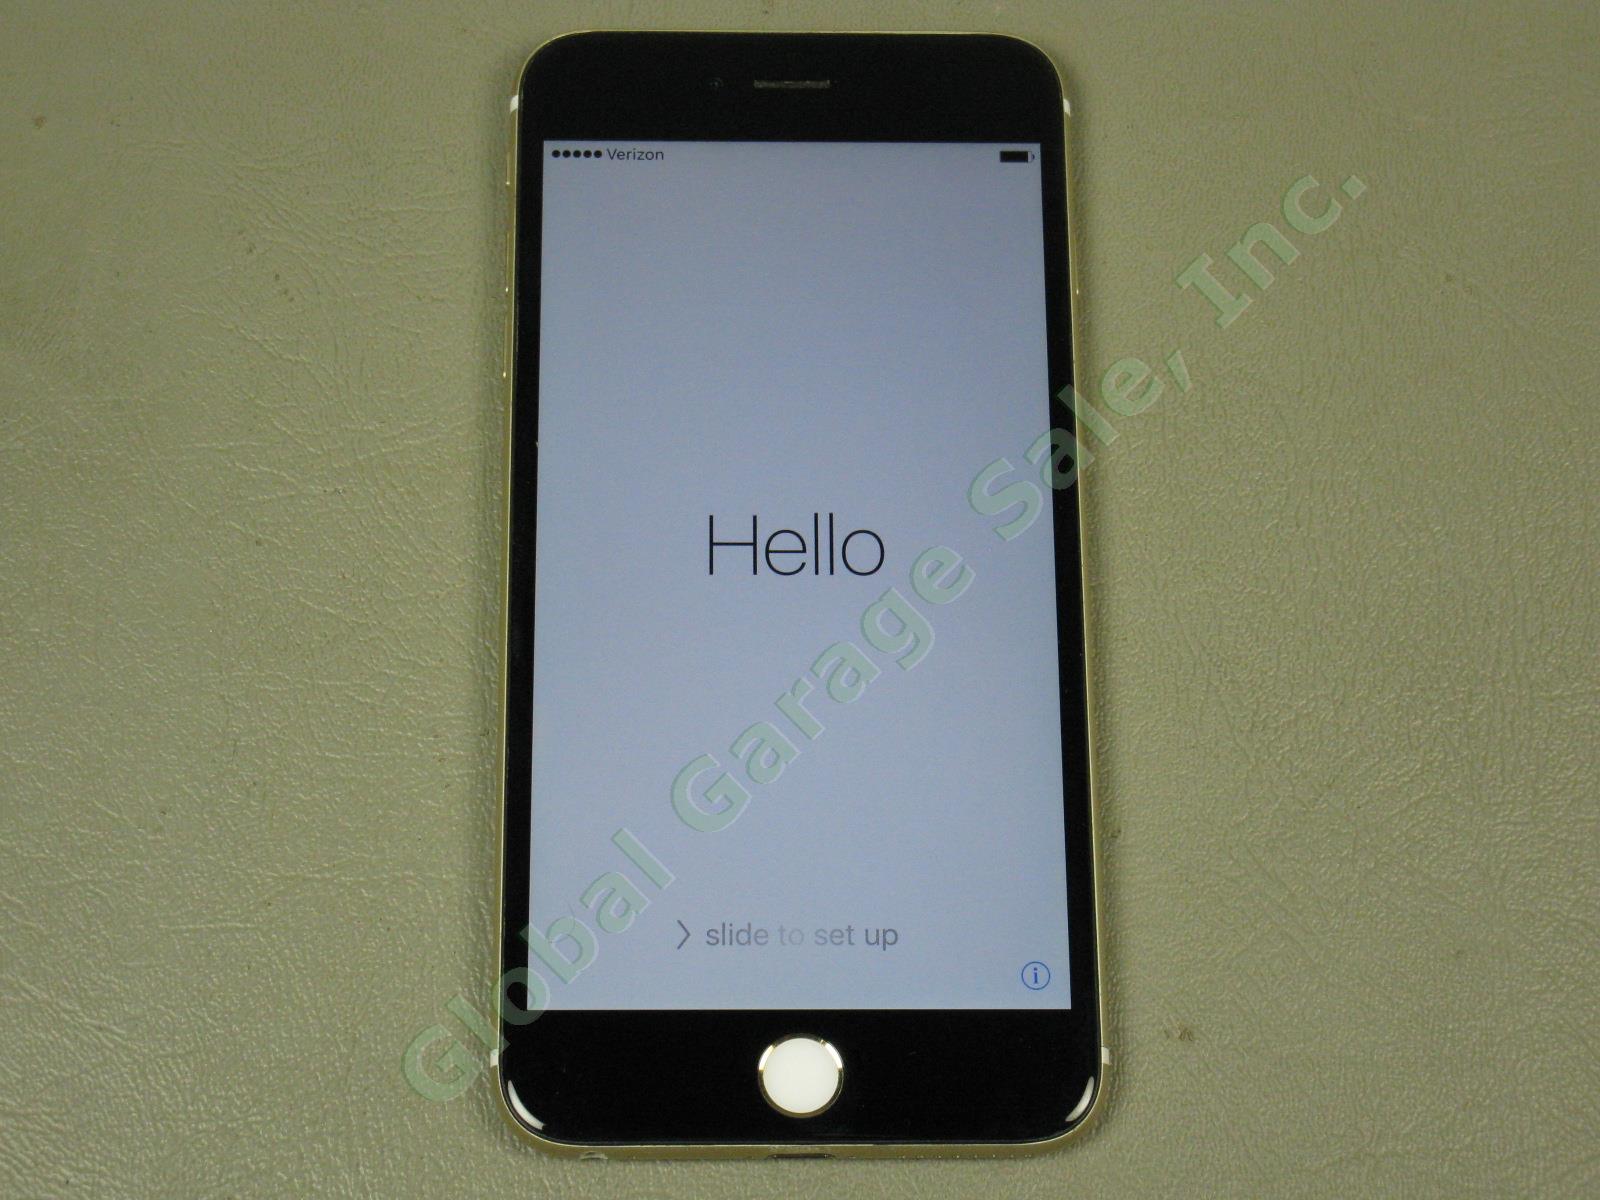 Apple iPhone 6 Plus Black 128GB A1522 MGCQ2LL/A Verizon Works Great No Reserve! 1